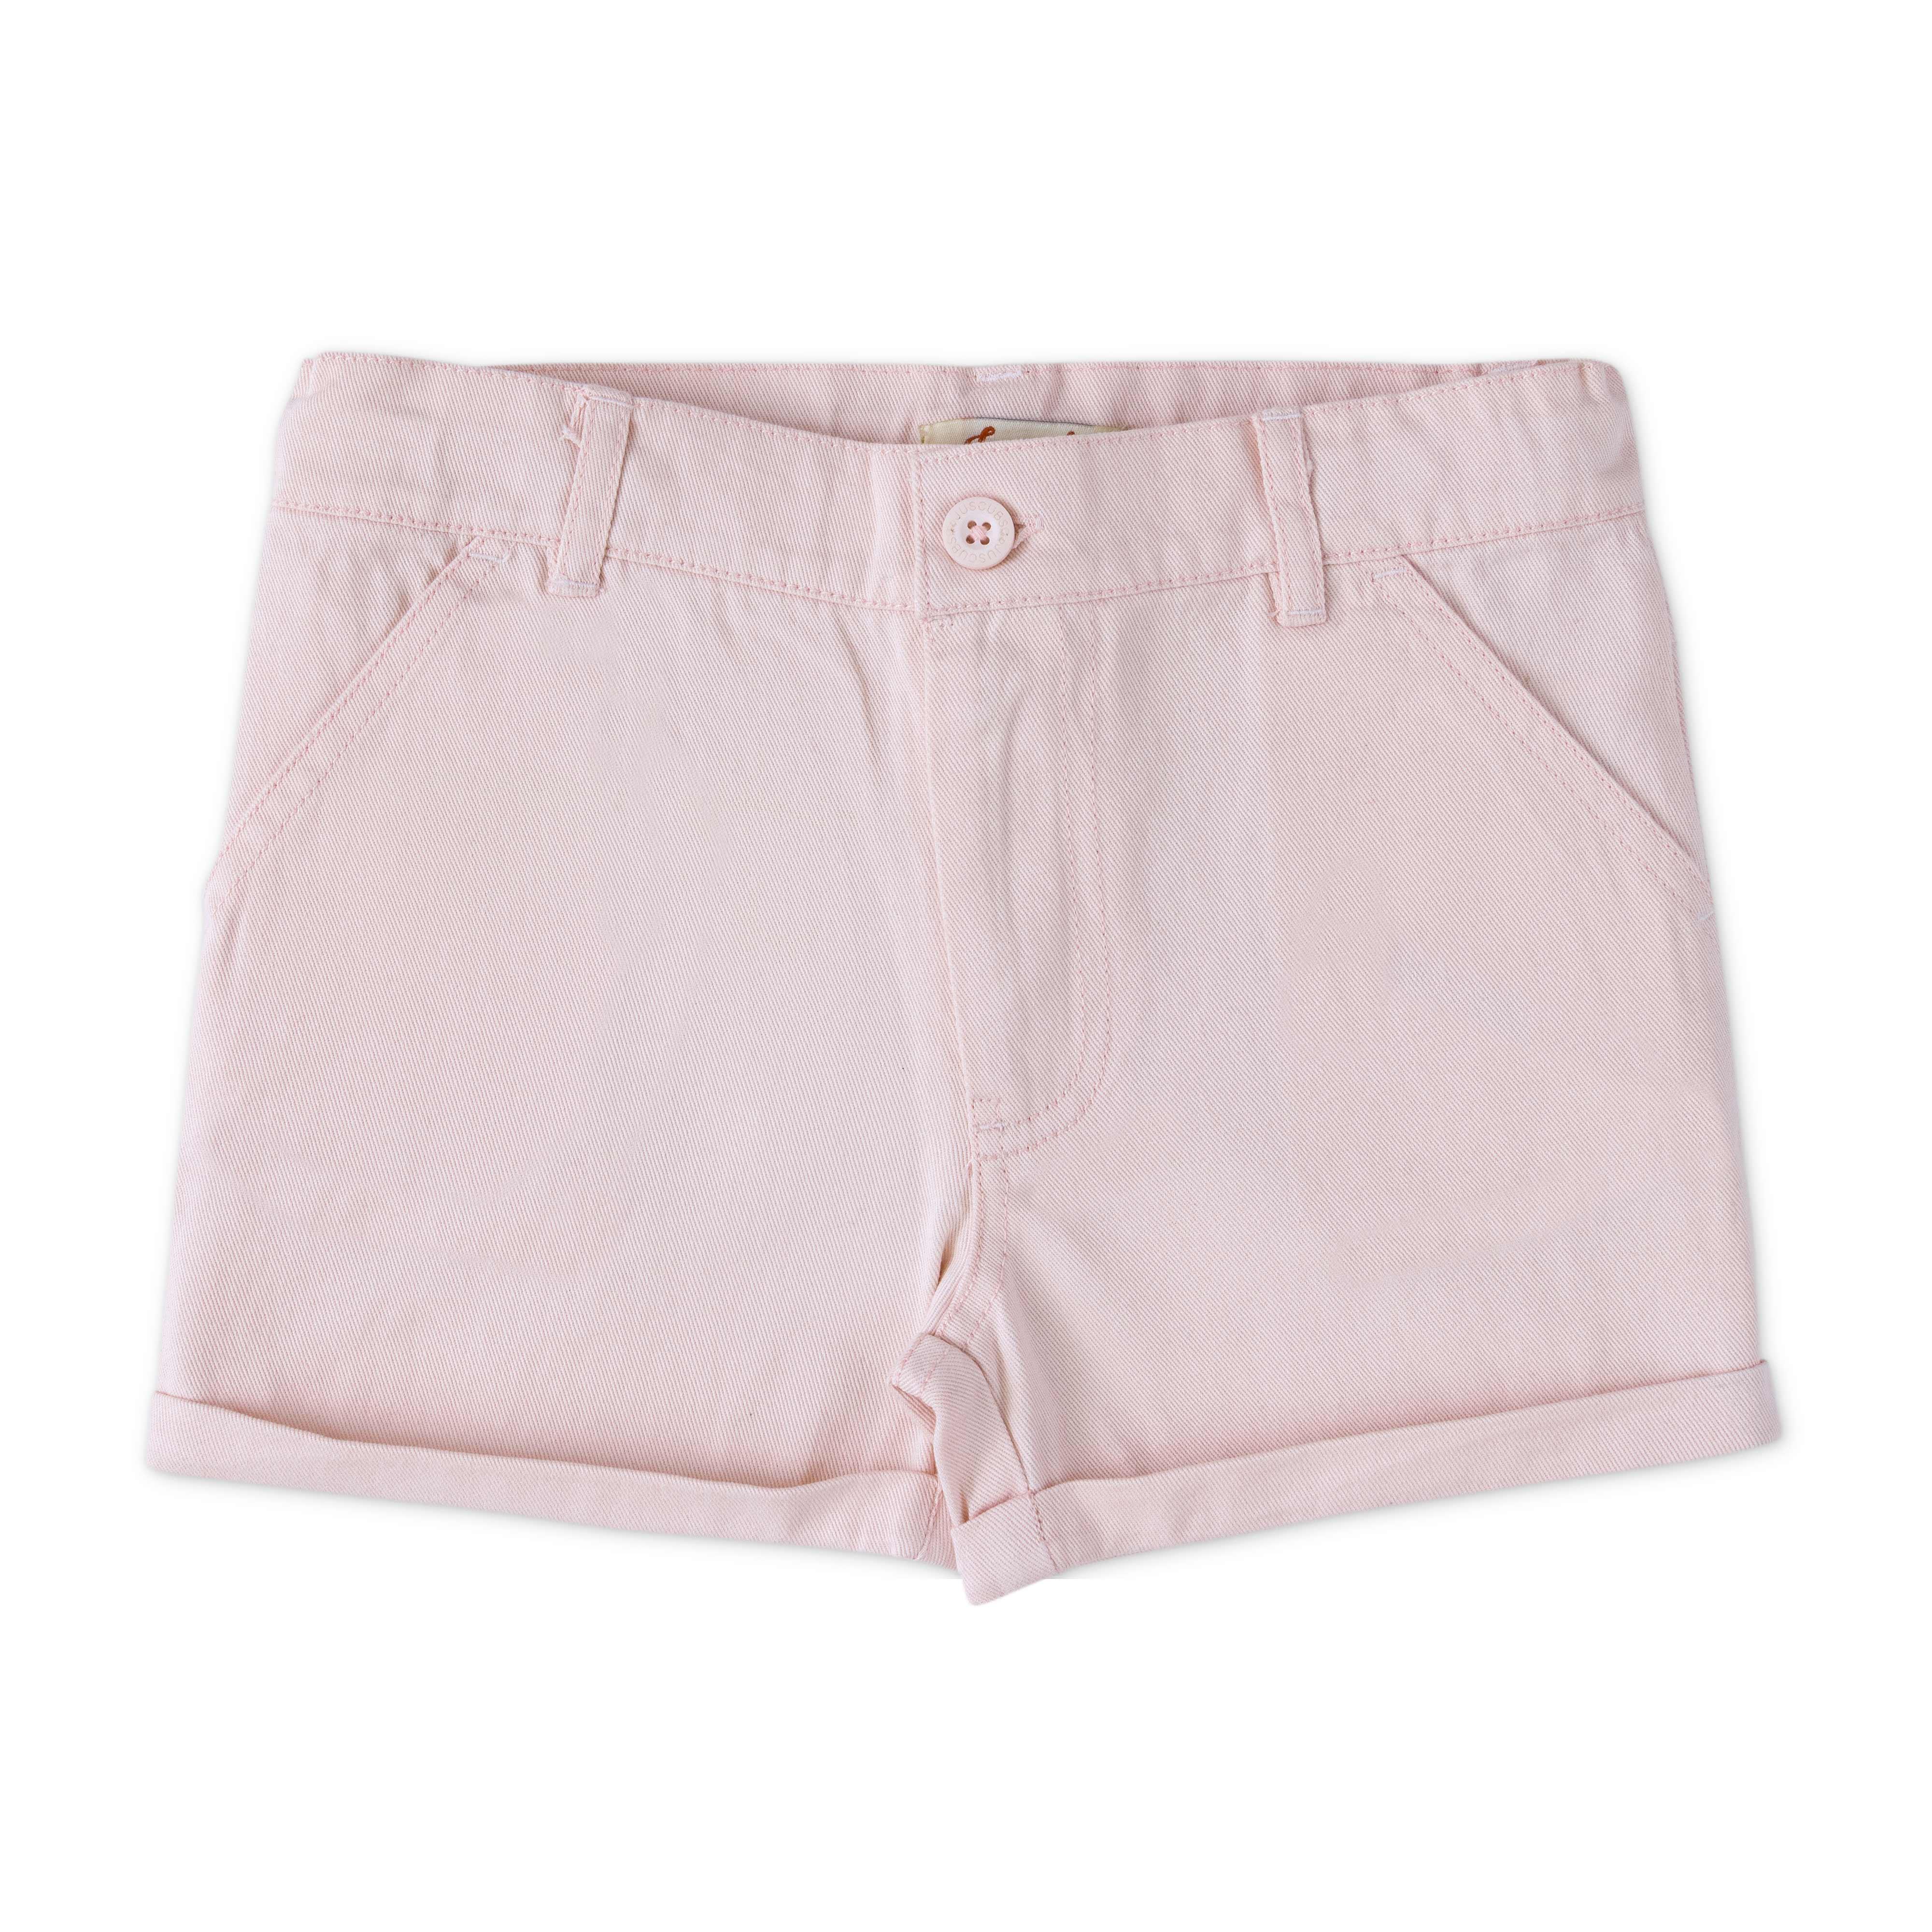 Girl Toddler Cotton Shorts - Light Pink - Juscubs